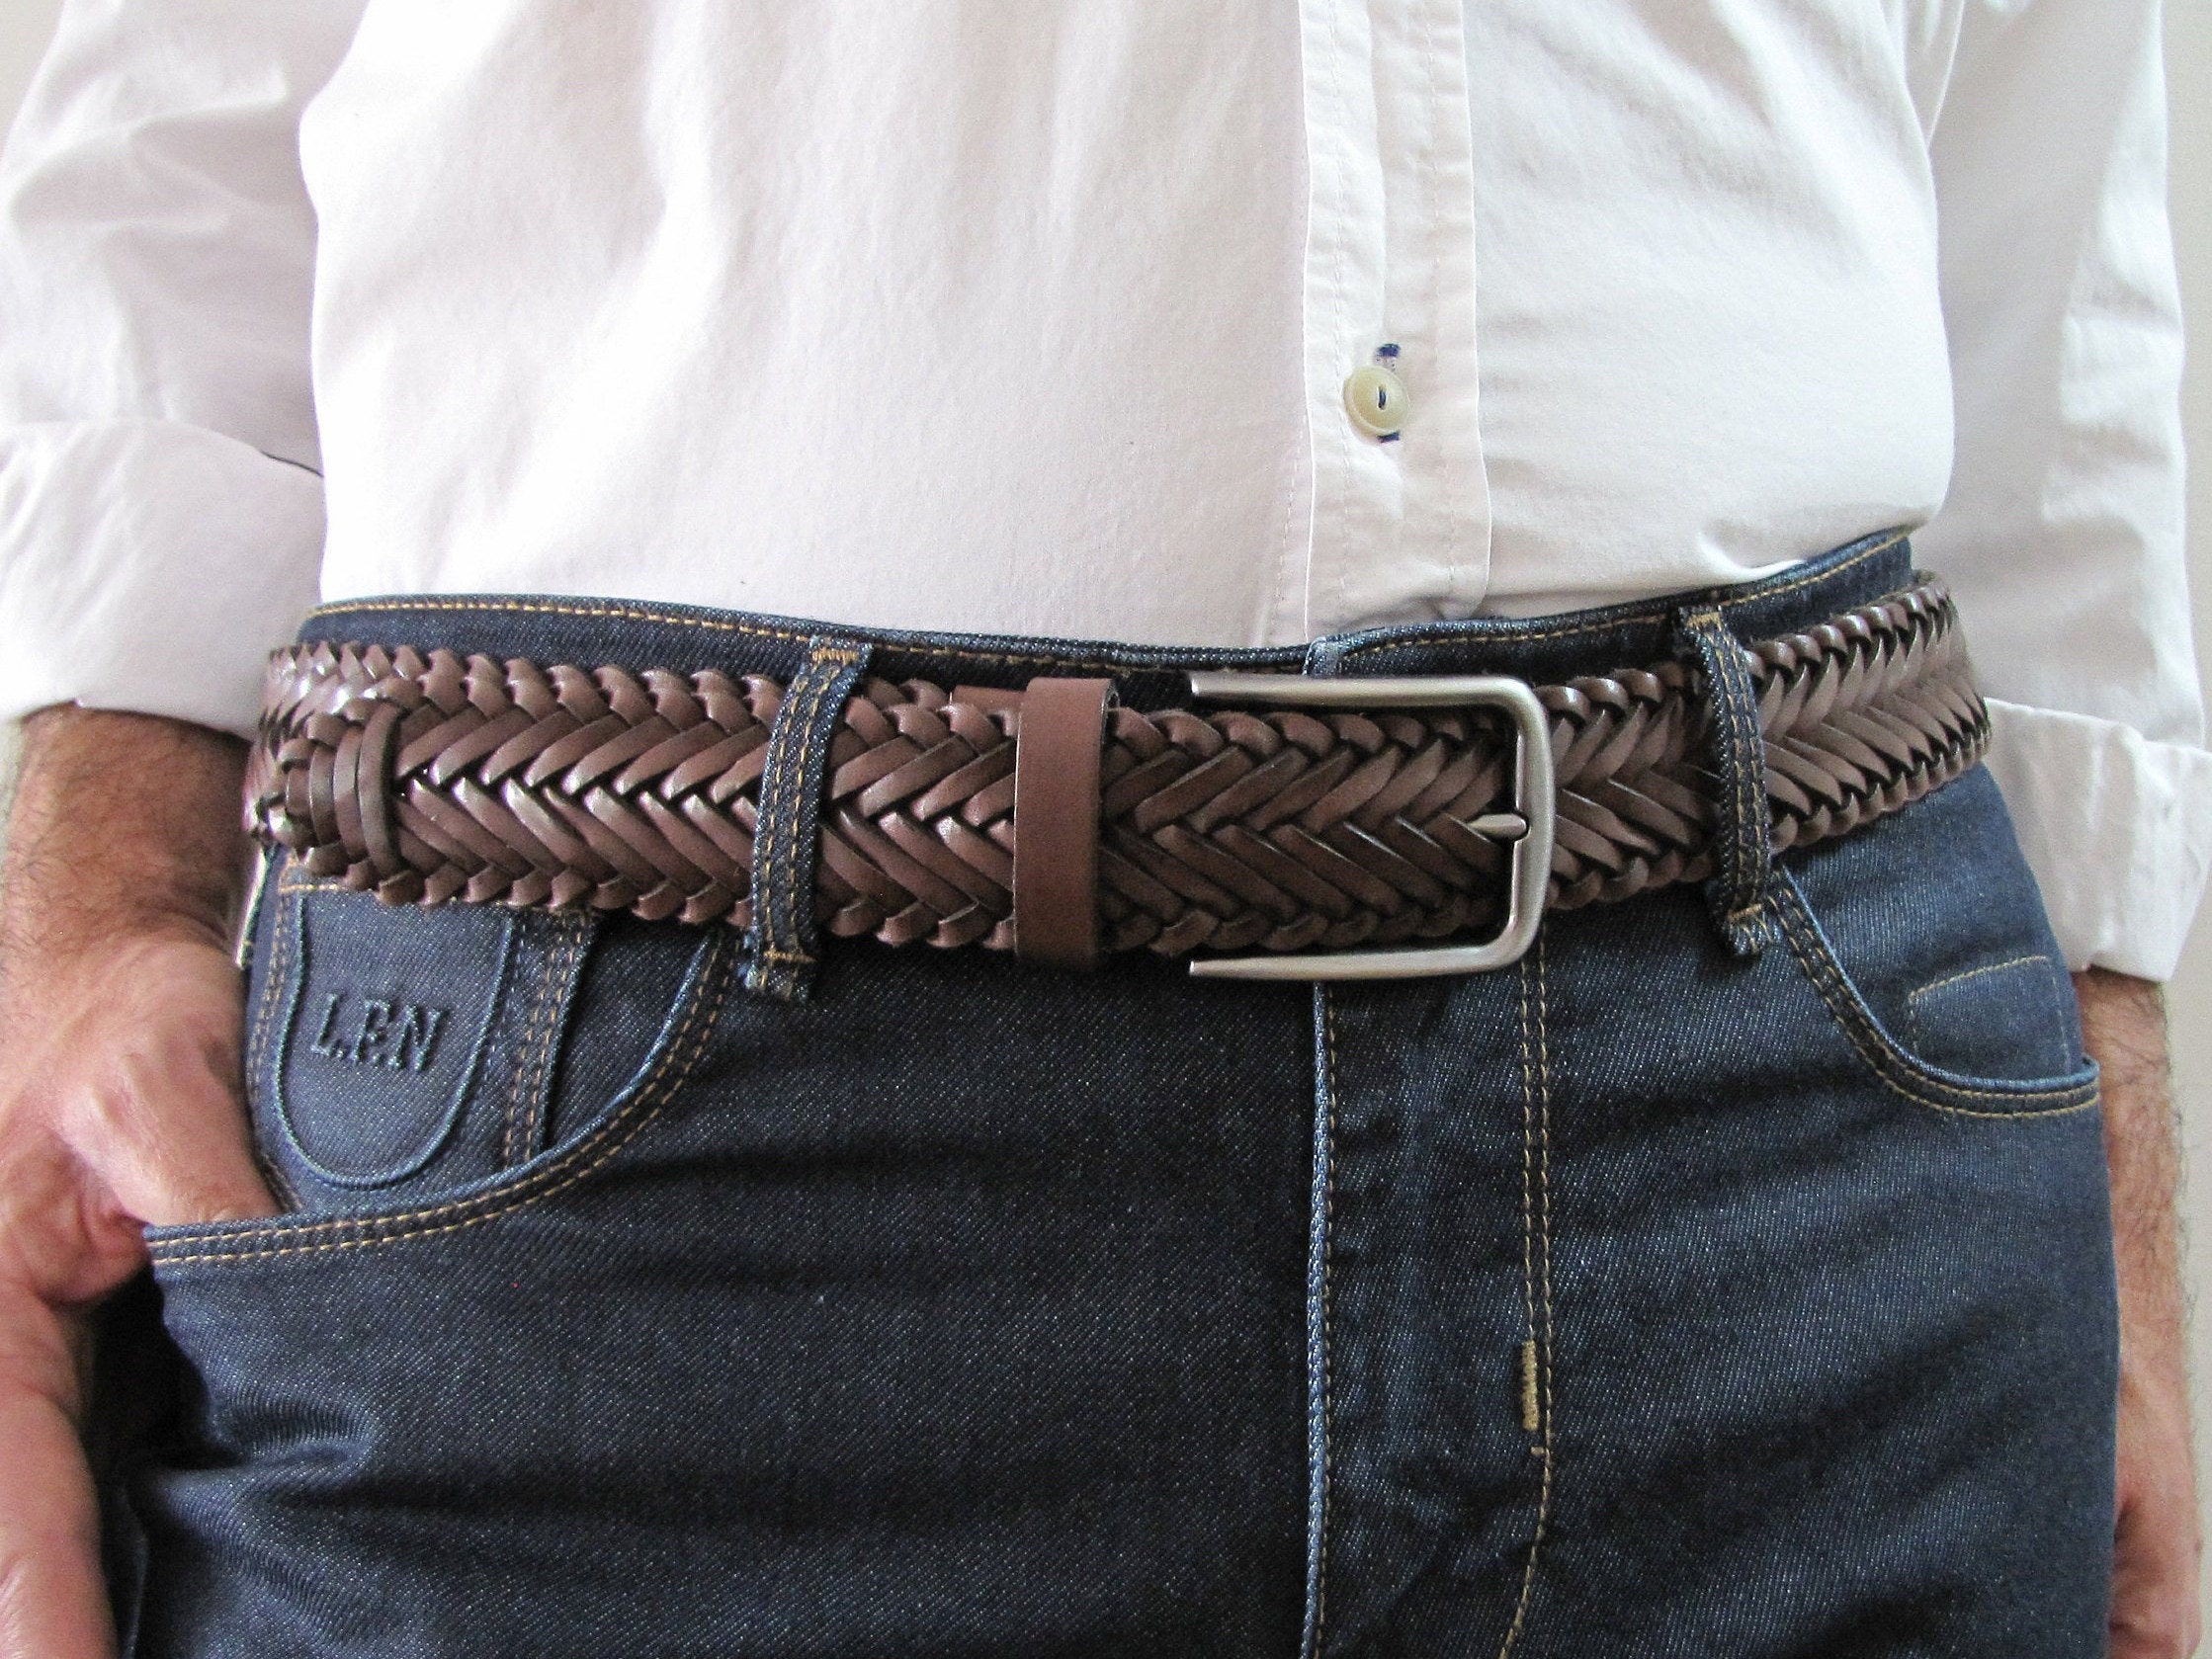 Men's Braided Belt in Chestnut